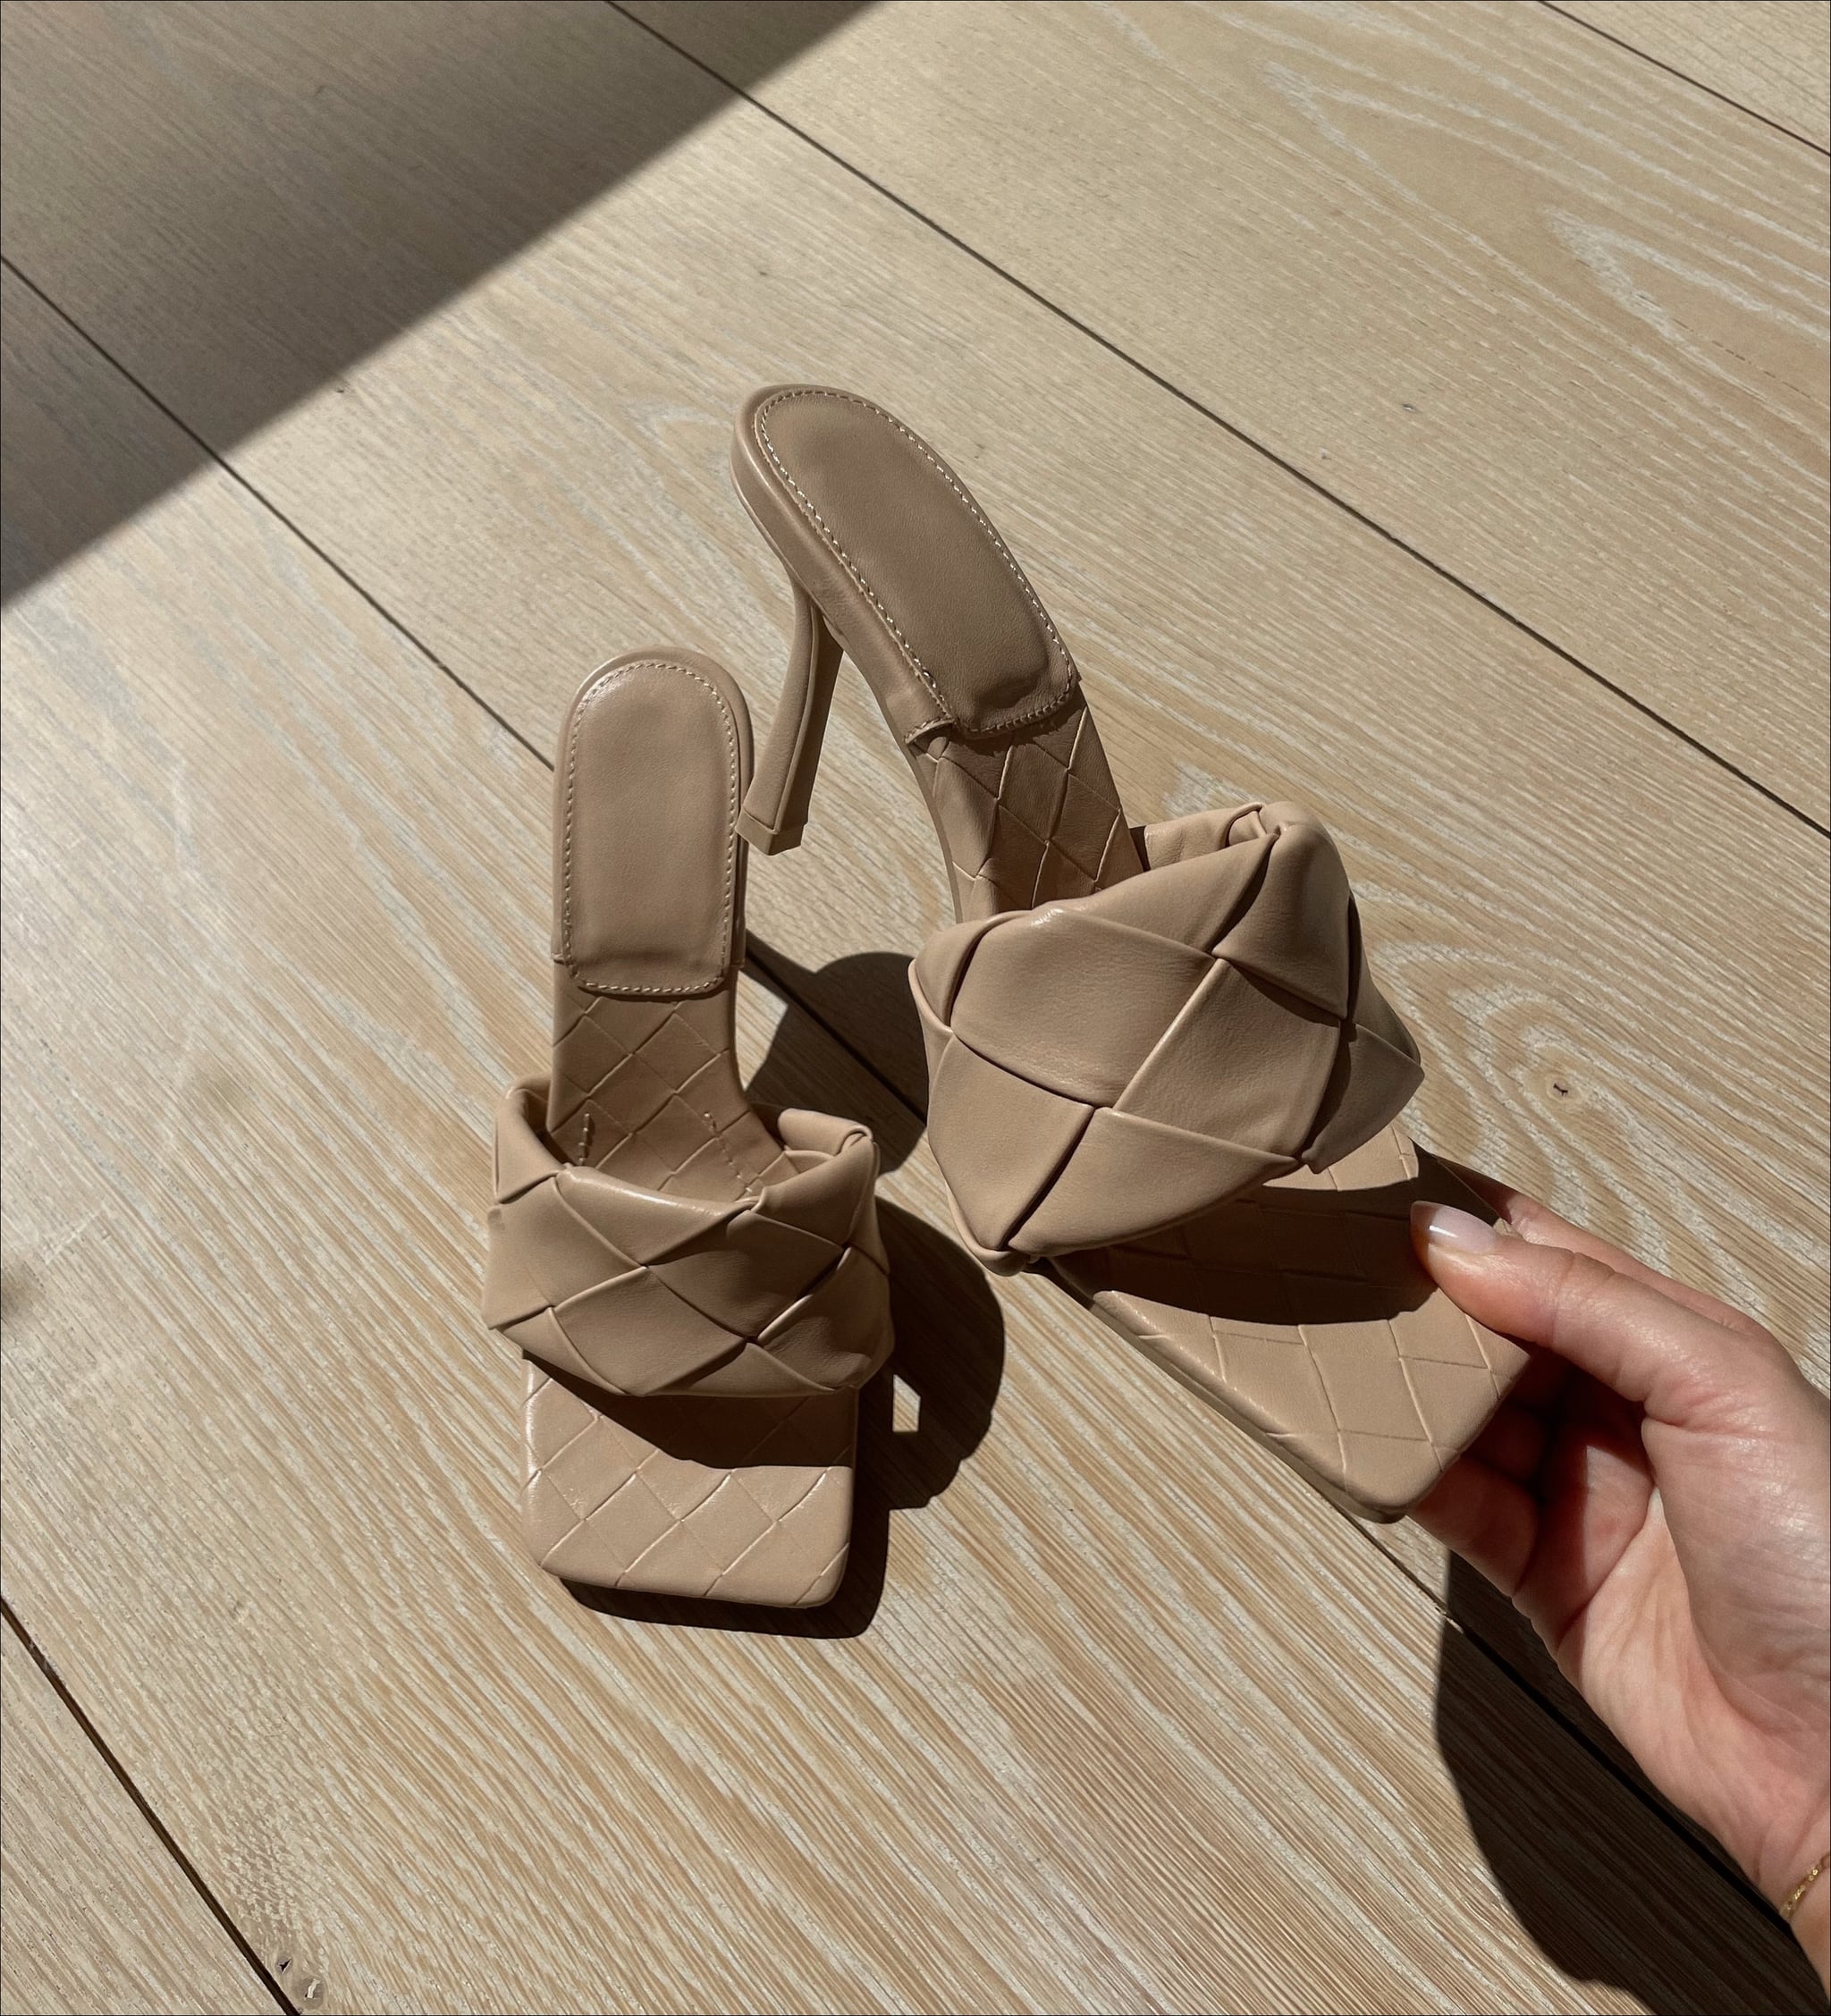 amazon under $50 heels and sandals